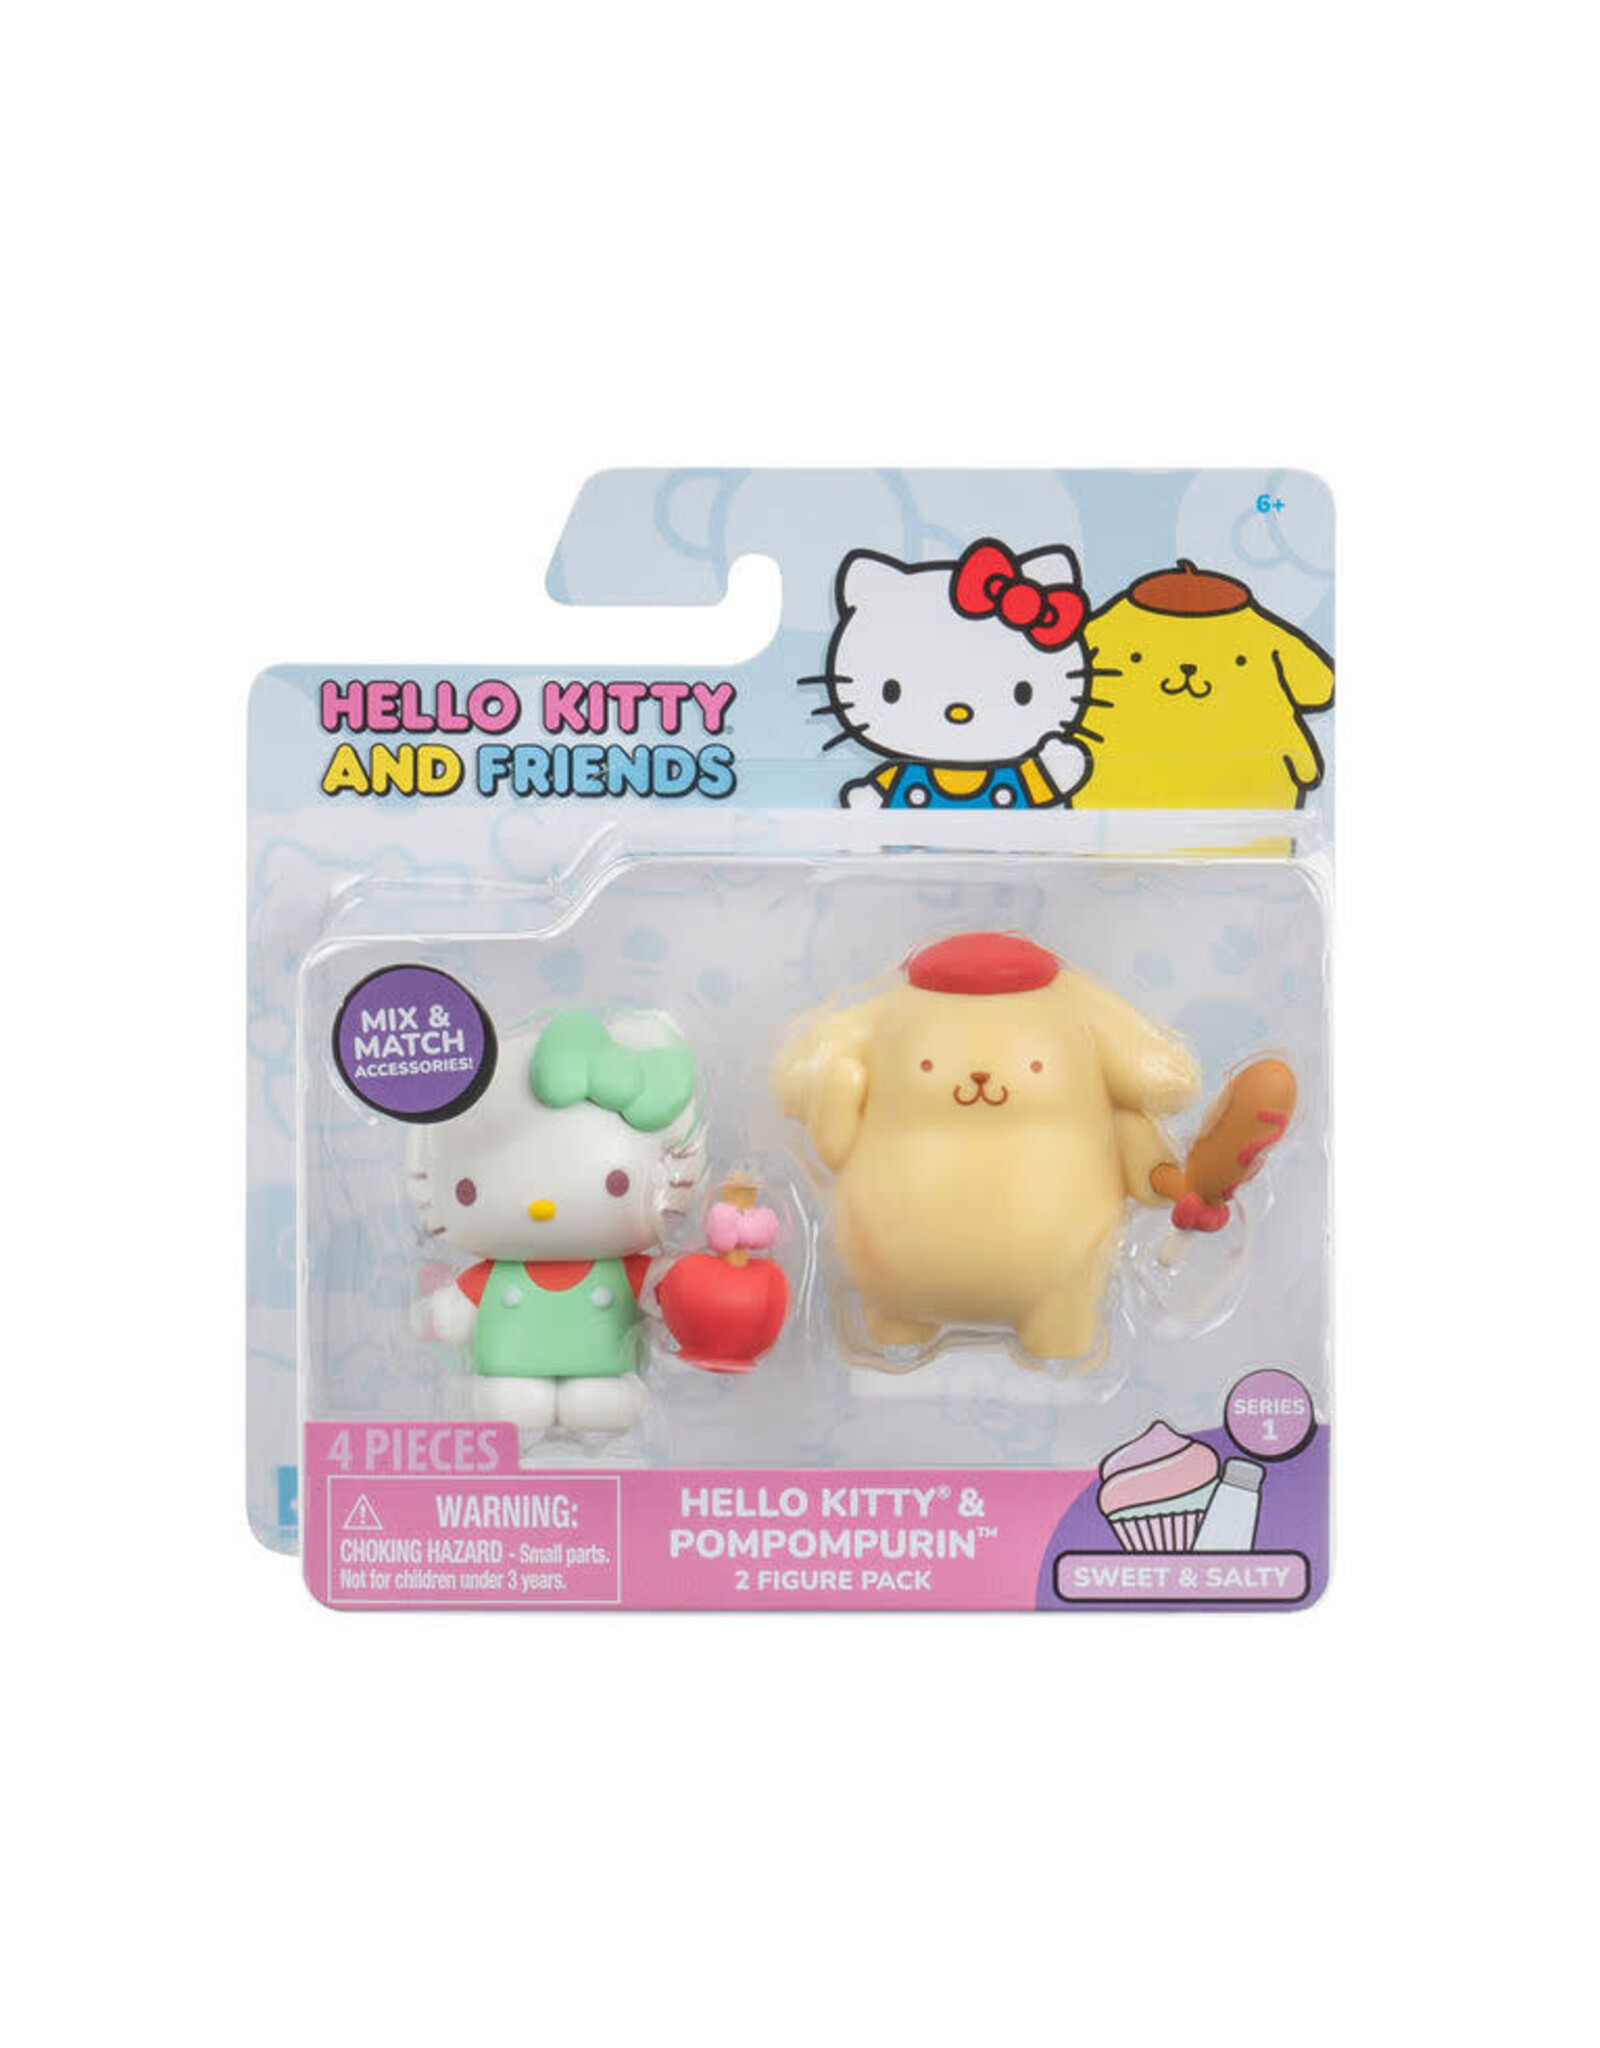 Hello Kitty and Friends 2 Figure Pack - Hello Kitty & Pompompurin (Caramel Apple & Corndog)